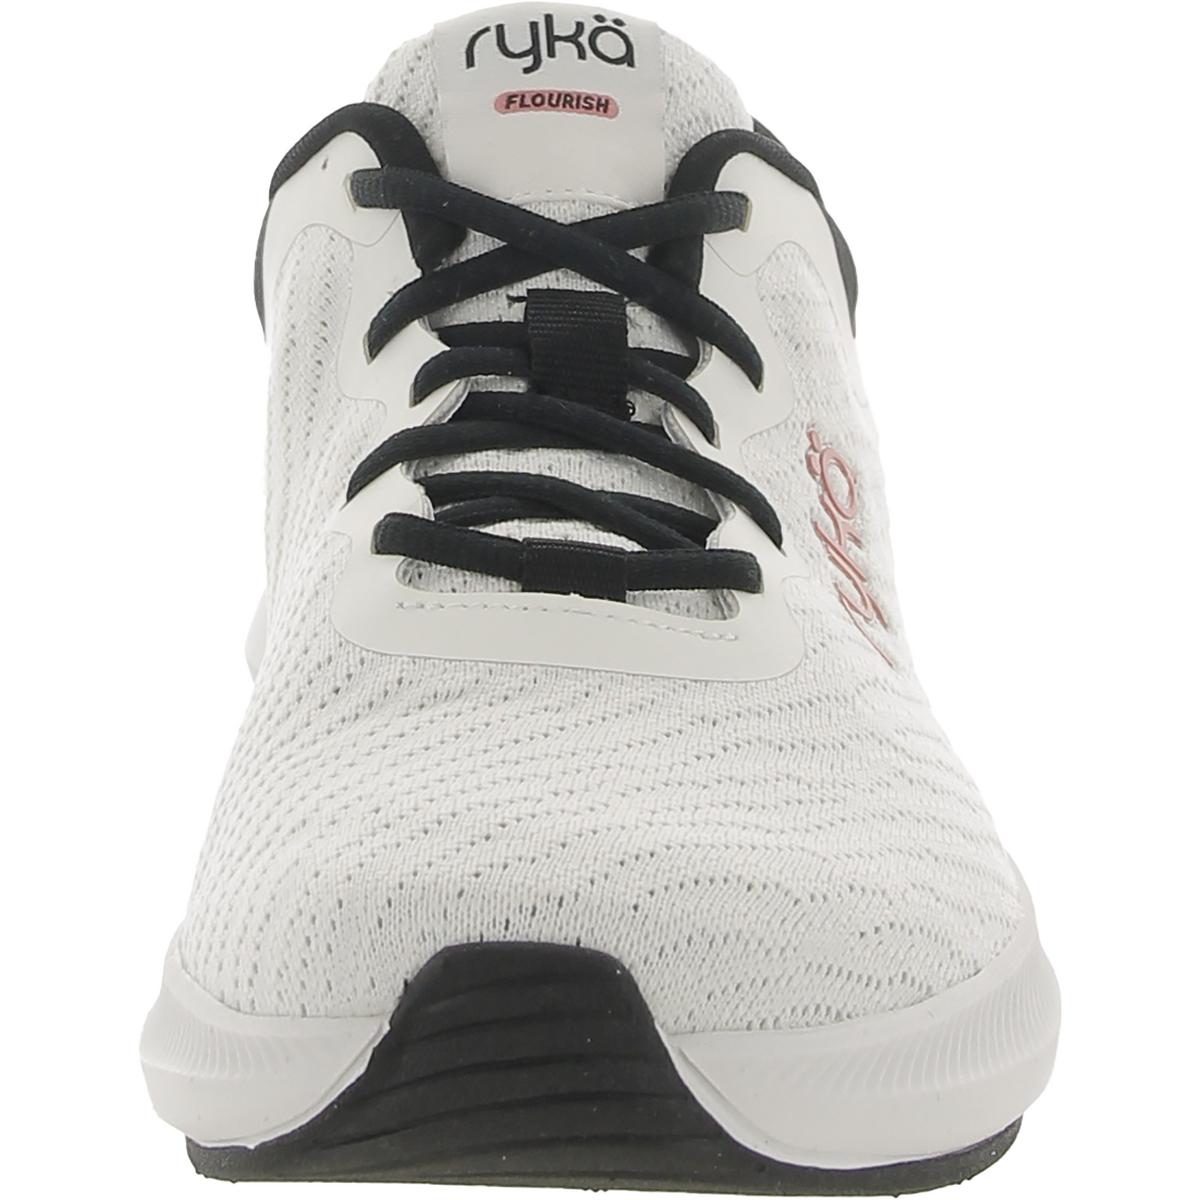 Ryka Flourish Womens Fitness Activewear Running Shoes